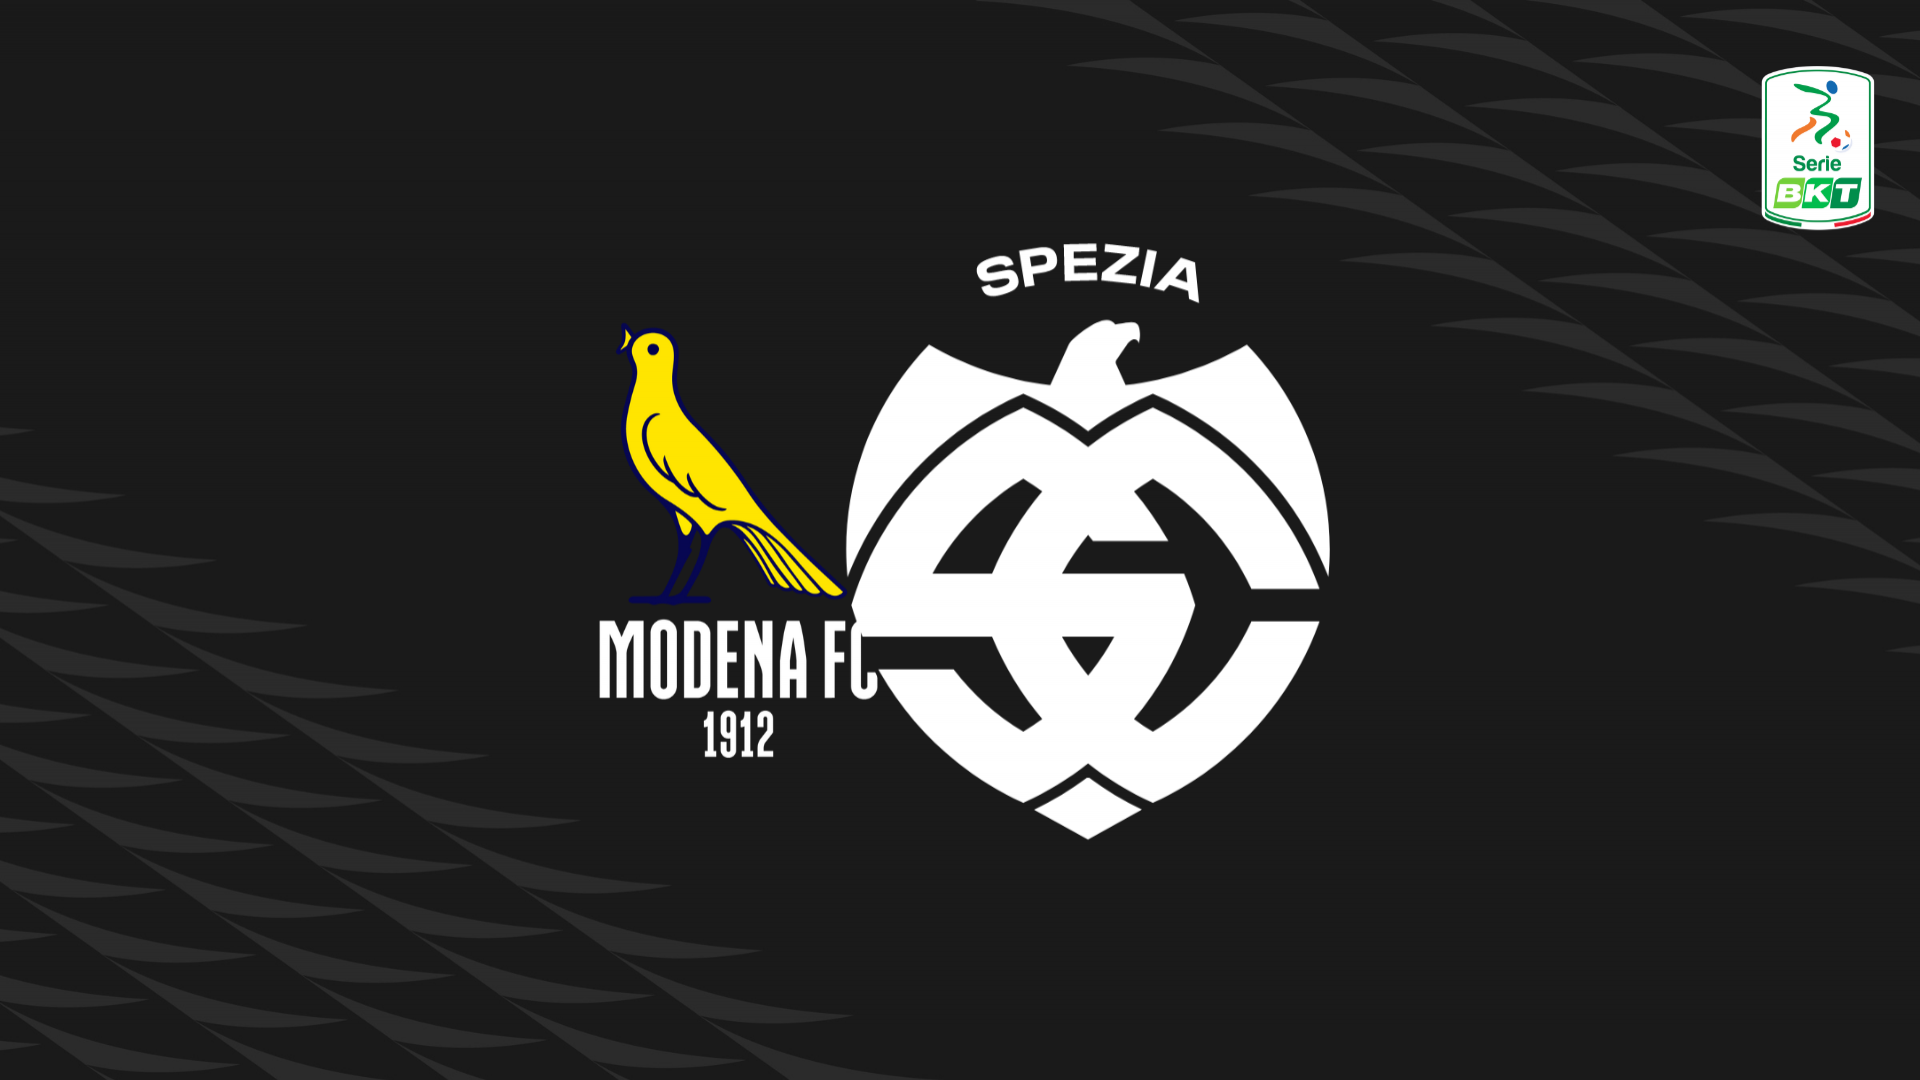 Serie BKT: Modena-Spezia 0-0